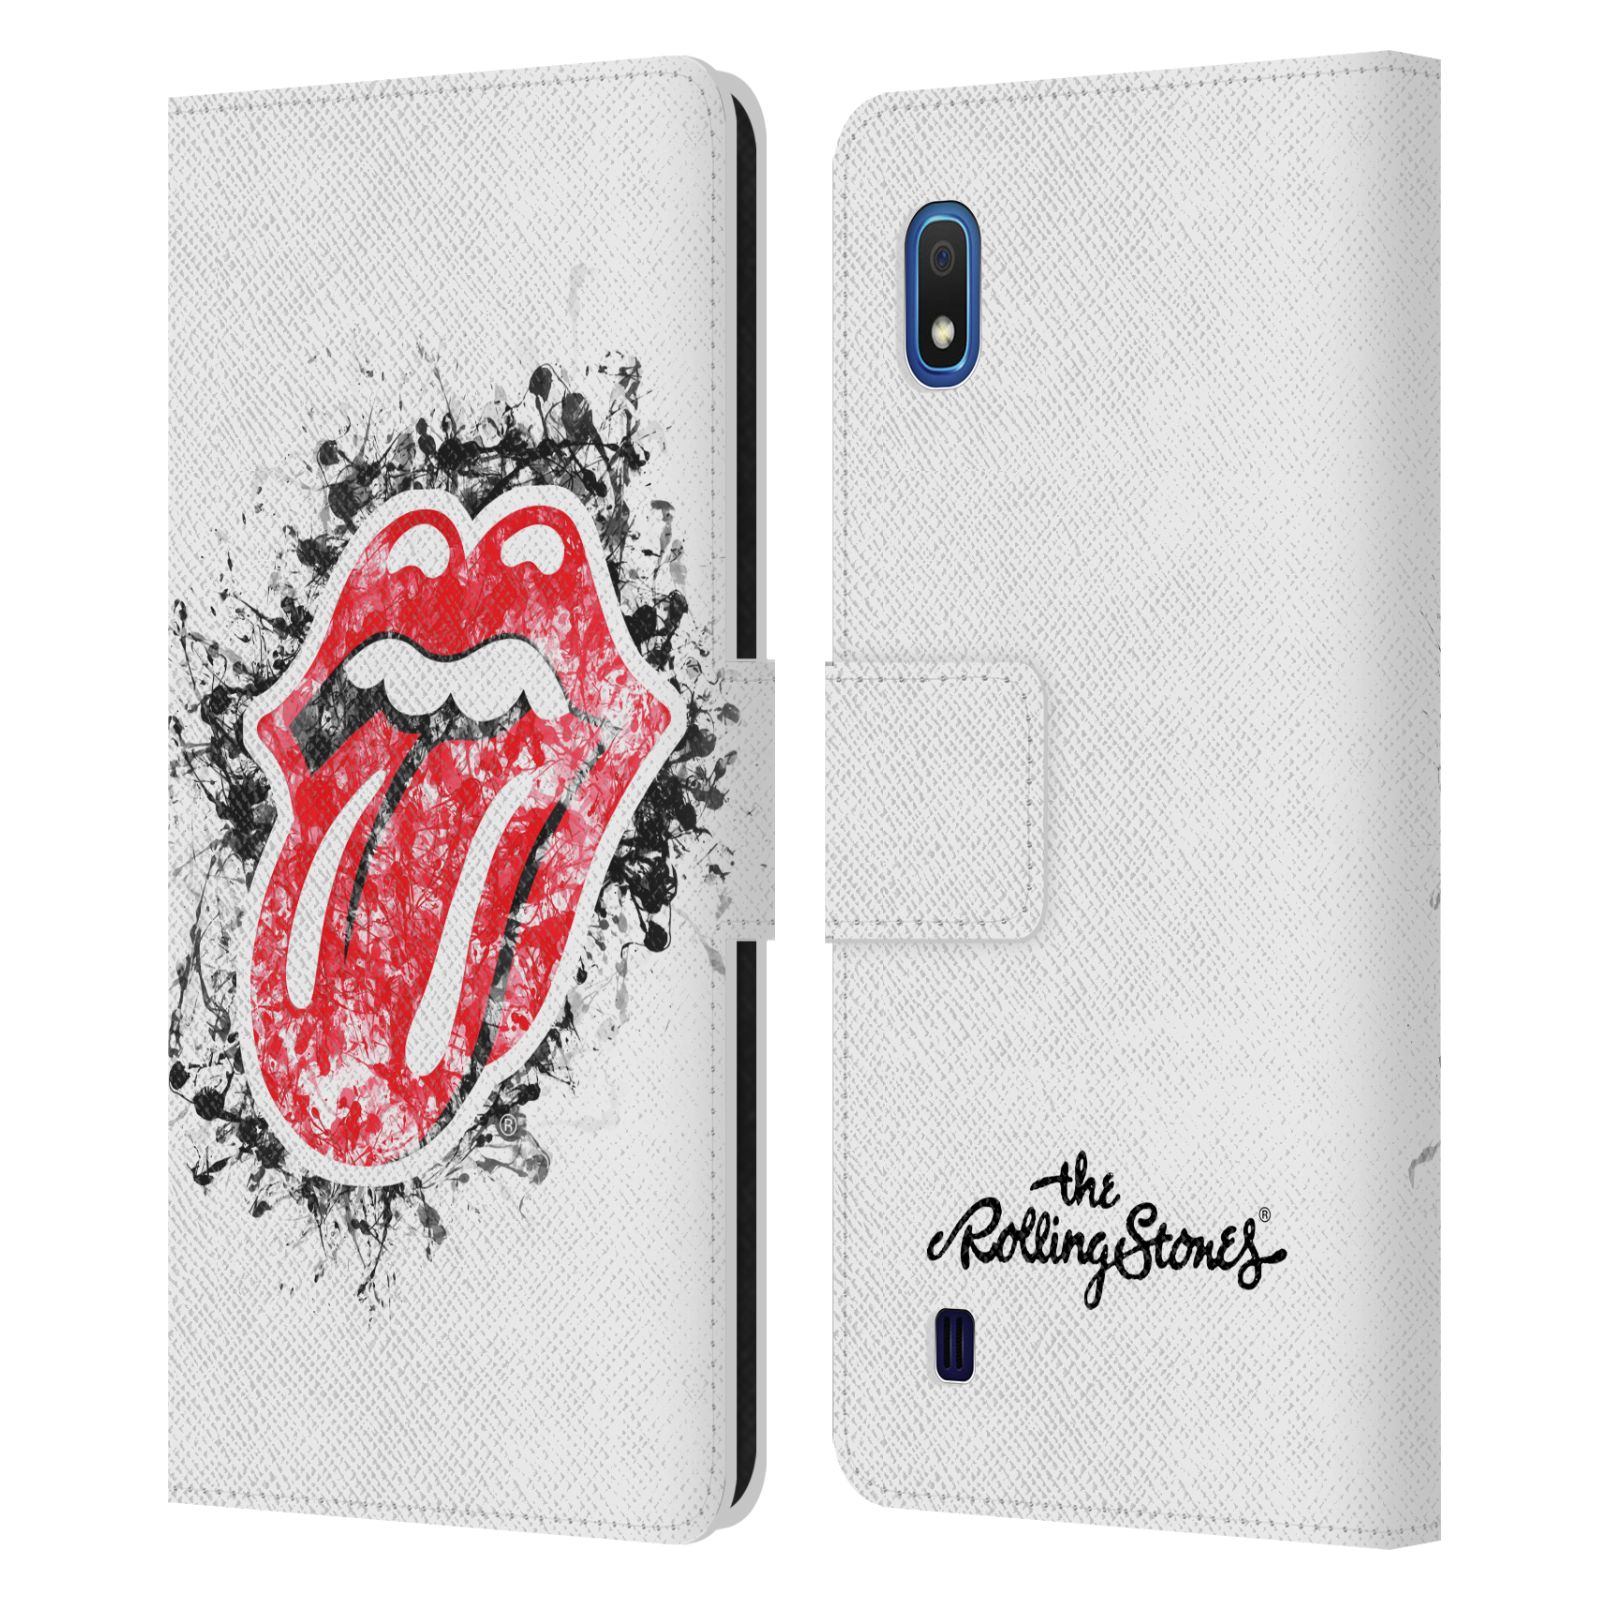 Pouzdro na mobil Samsung Galaxy A10 - Head Case - Rolling Stones - Logo bílé pozadí